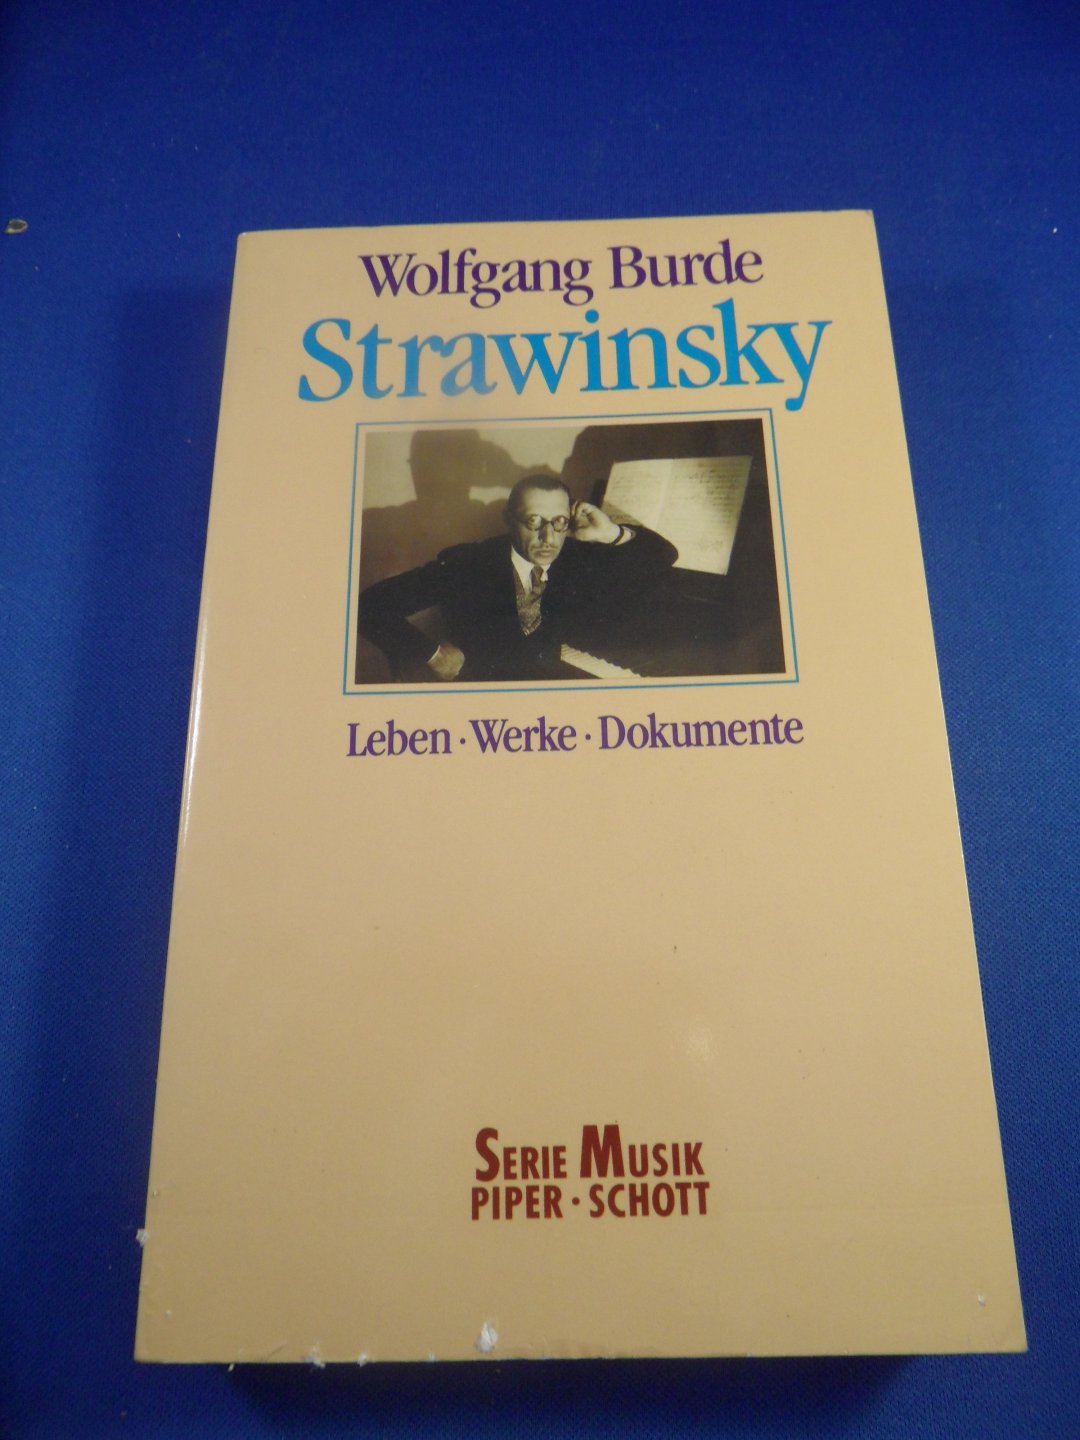 Burde, Wolfgang - Strawinsky. Leben - Werke - Dokumente